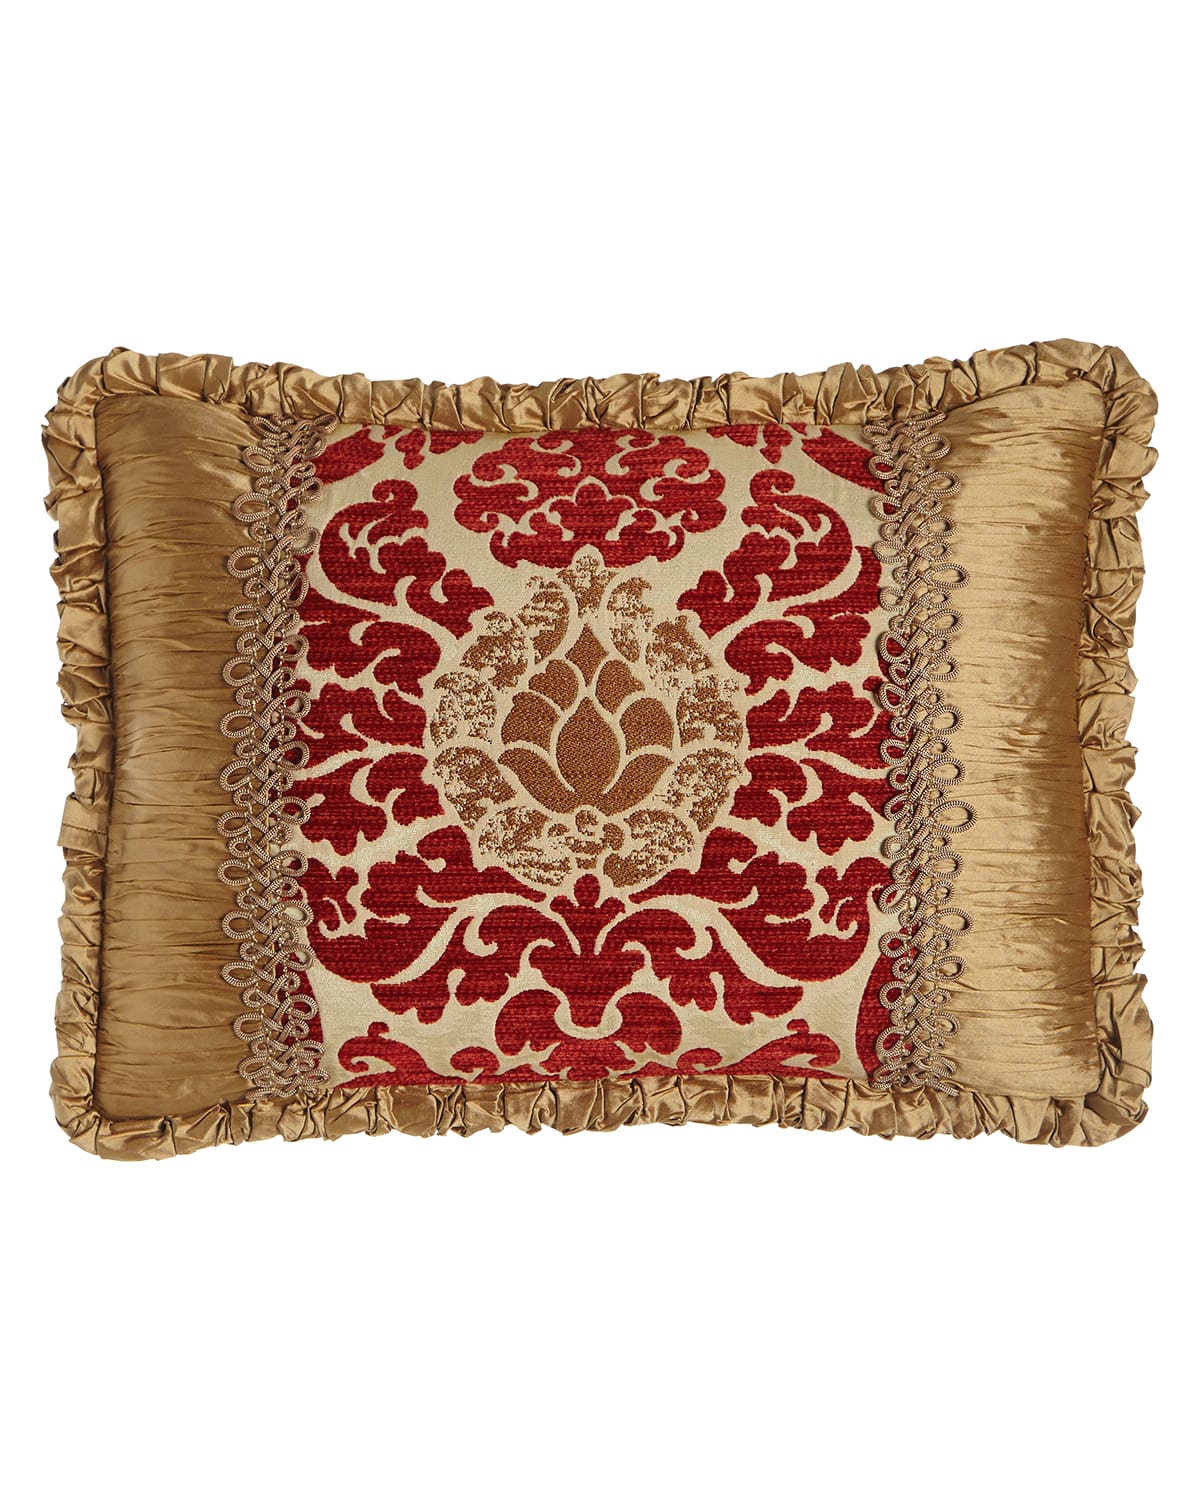 Image Austin Horn Collection Arabesque Pieced Pillow, 14" x 21"